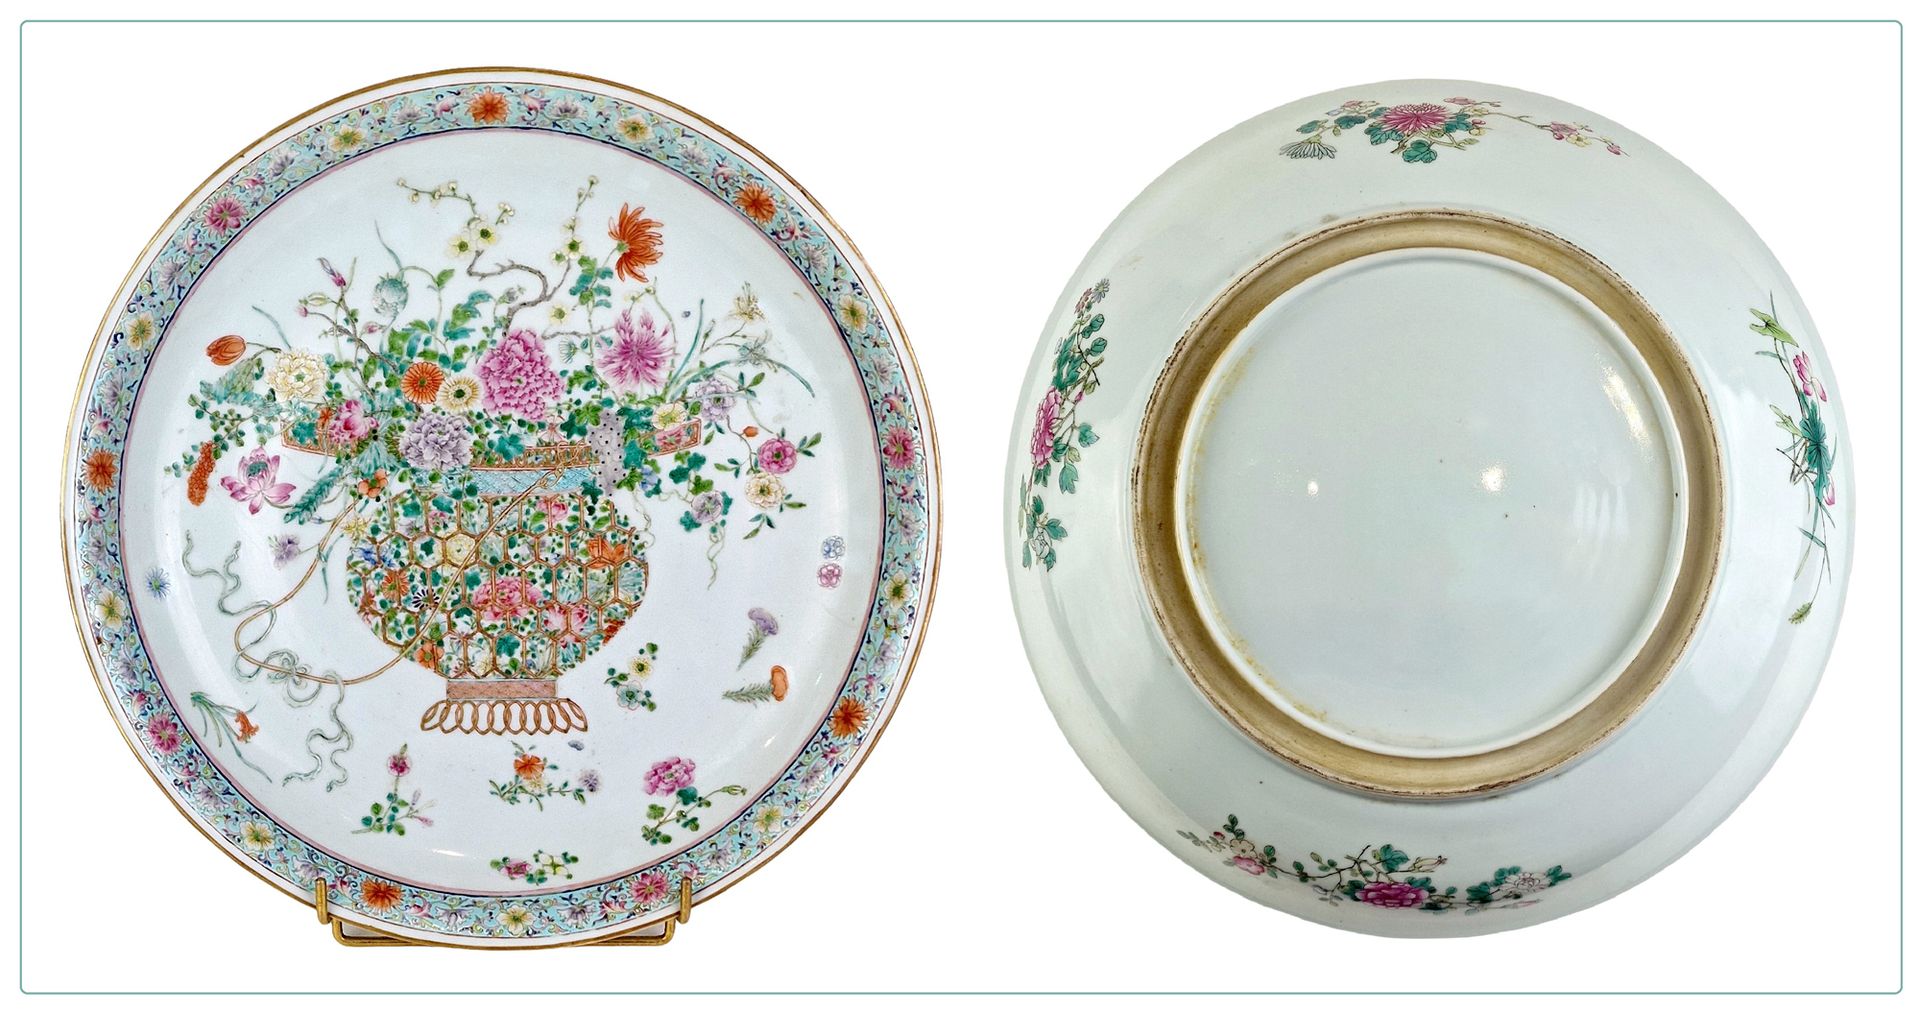 CHINE, vers 1900 CHINE, VERS 1900

Grand plat

----------

En porcelaine blanche&hellip;